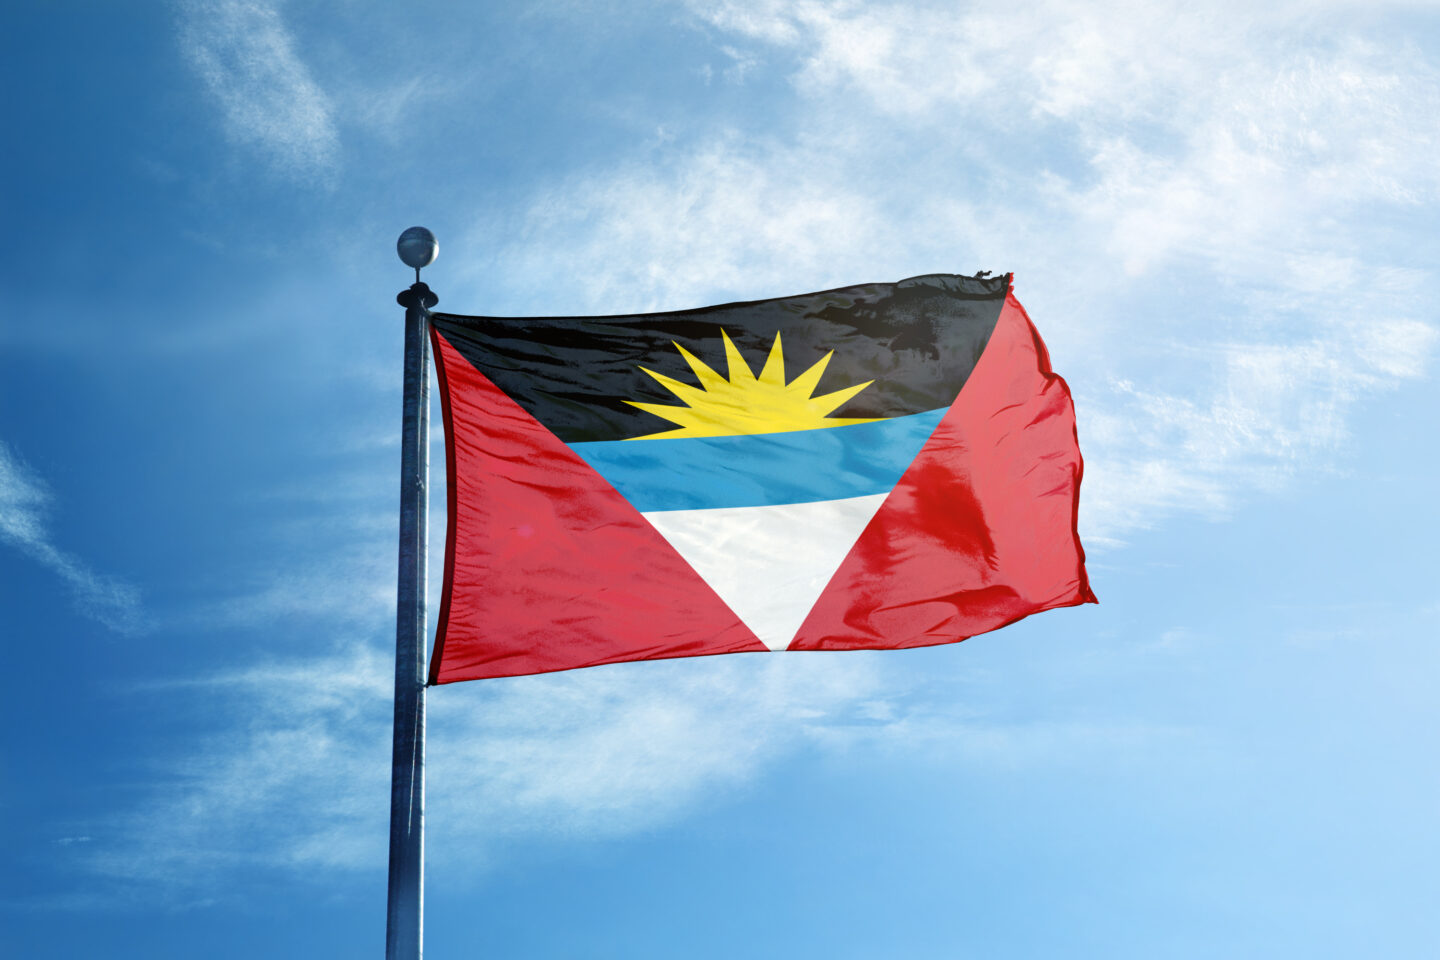 Antigua and Barbuda Grant Rastafari Sacramental Rights To Grow Cannabis